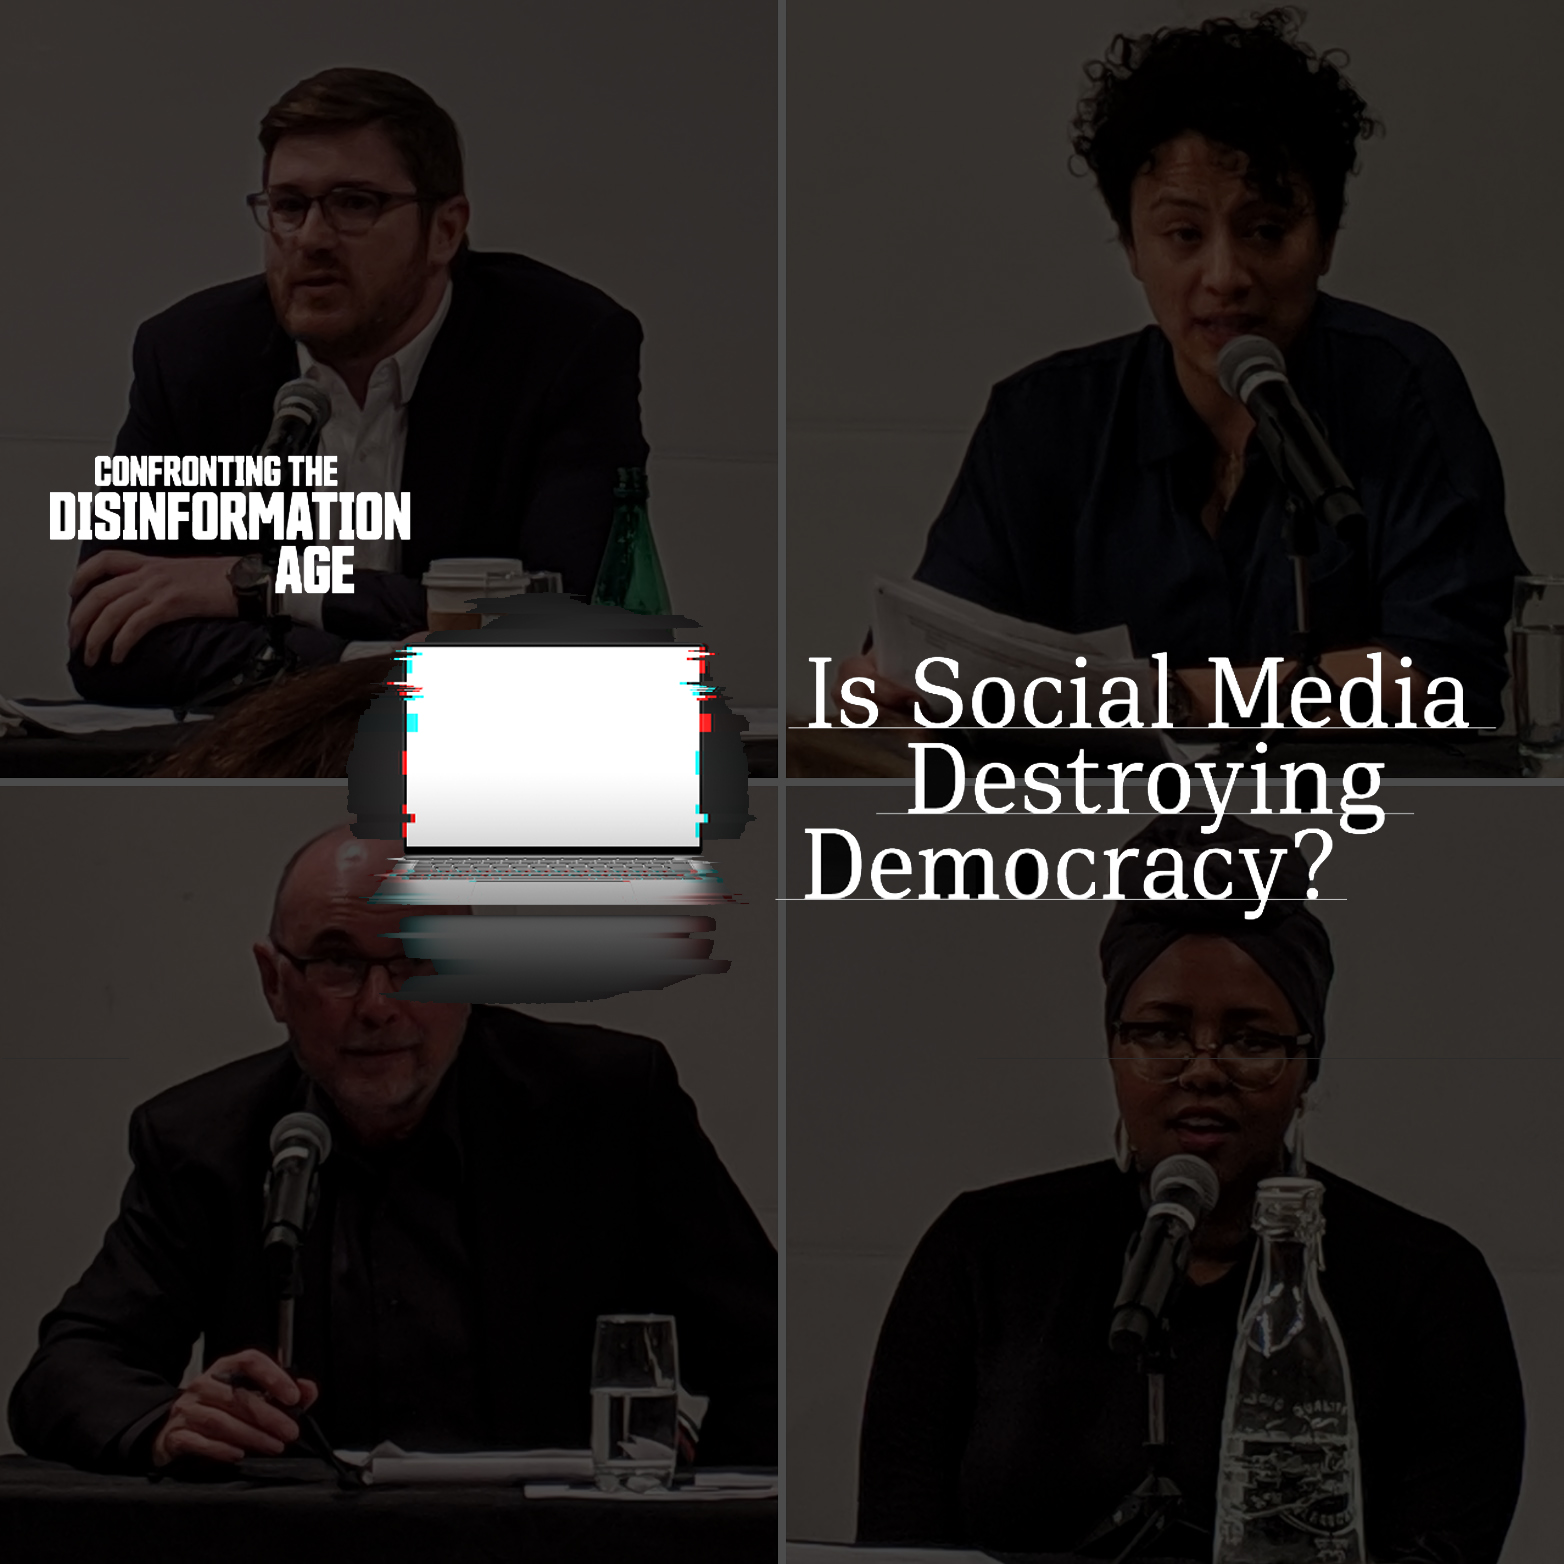 Debate: Is social media destroying democracy?